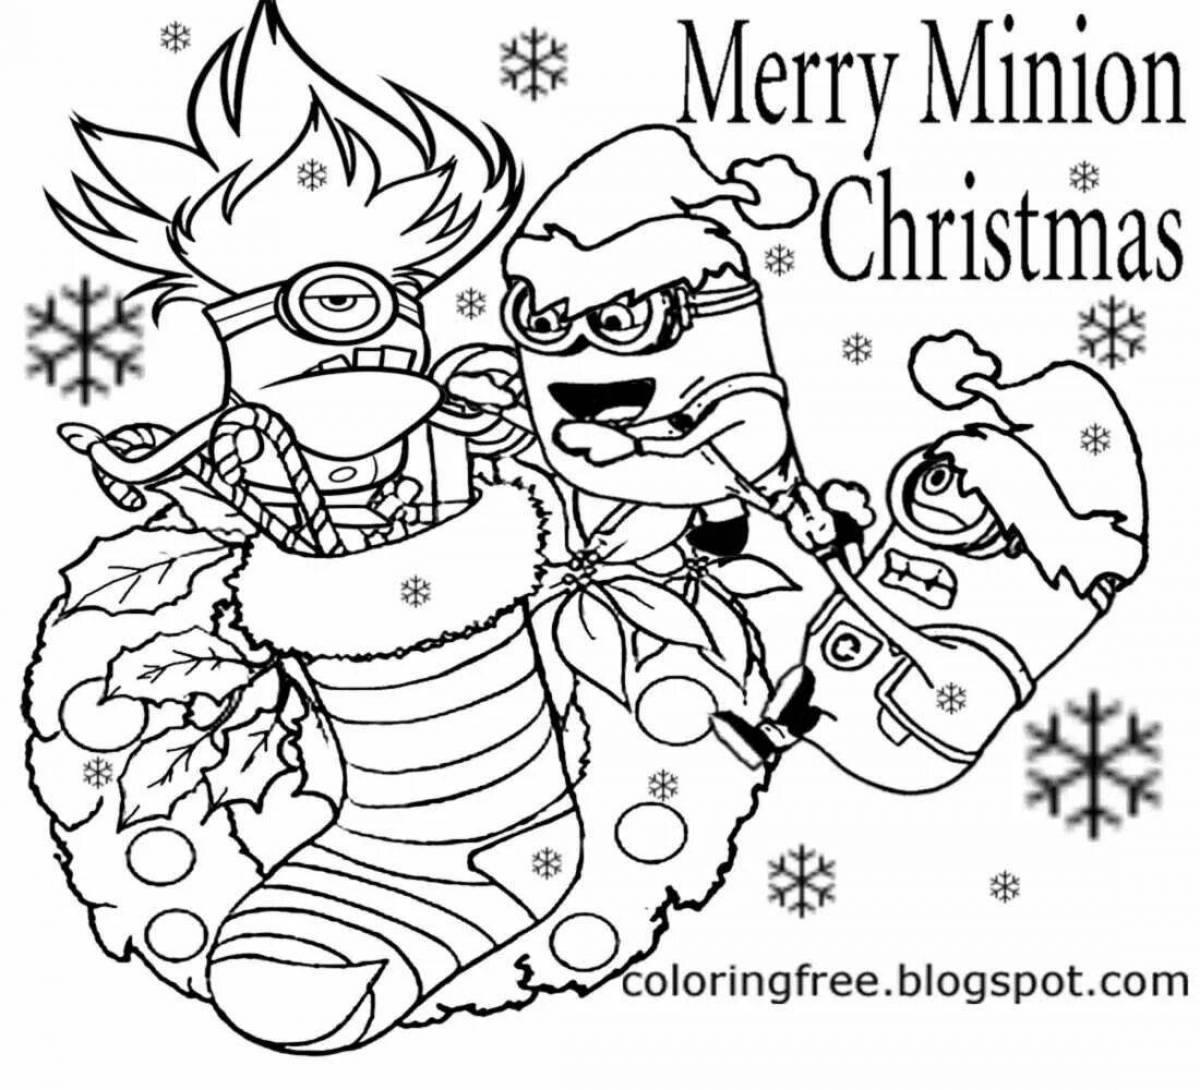 Christmas coloring minion-crazy color